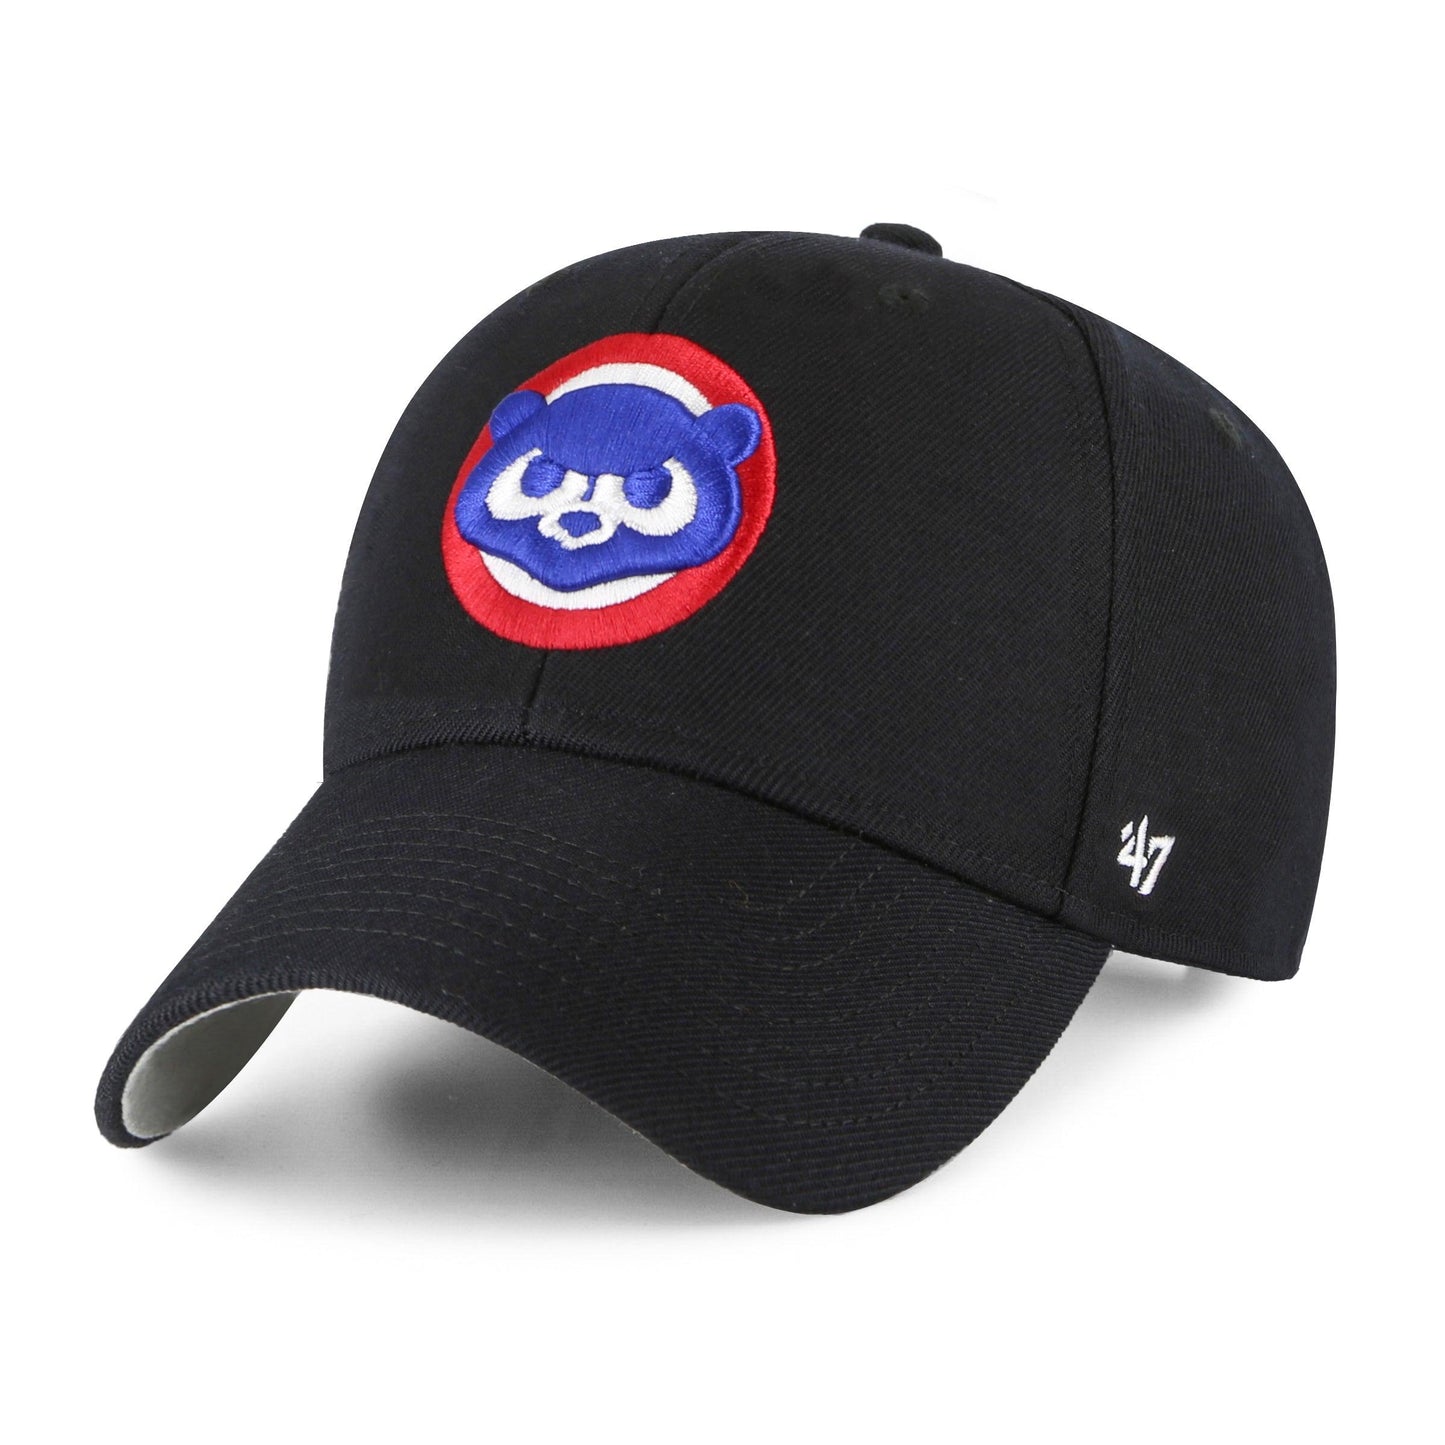 MLB CHICAGO CUBS '47 MVP CAP BLACK